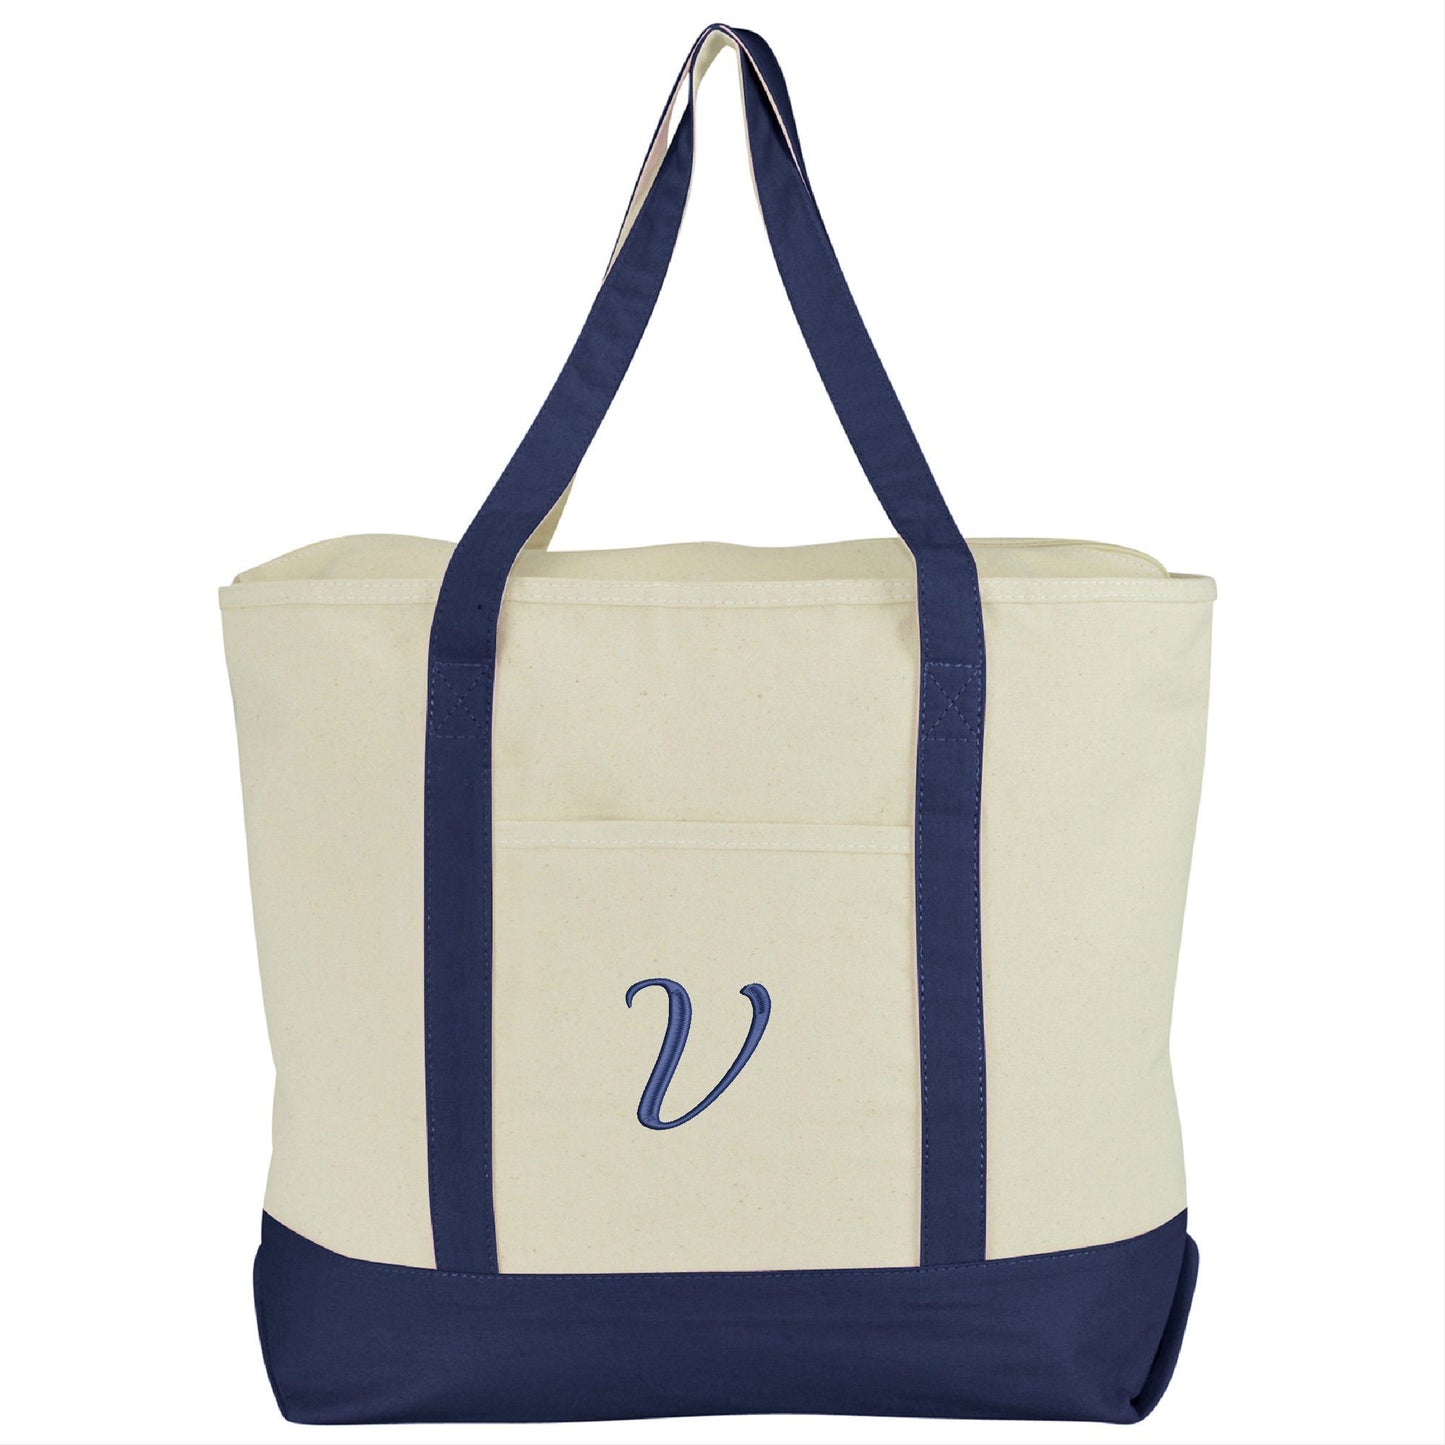 DALIX Personalized Tote Bag Monogram Navy Blue A-Z Bags DALIX V Navy Blue 